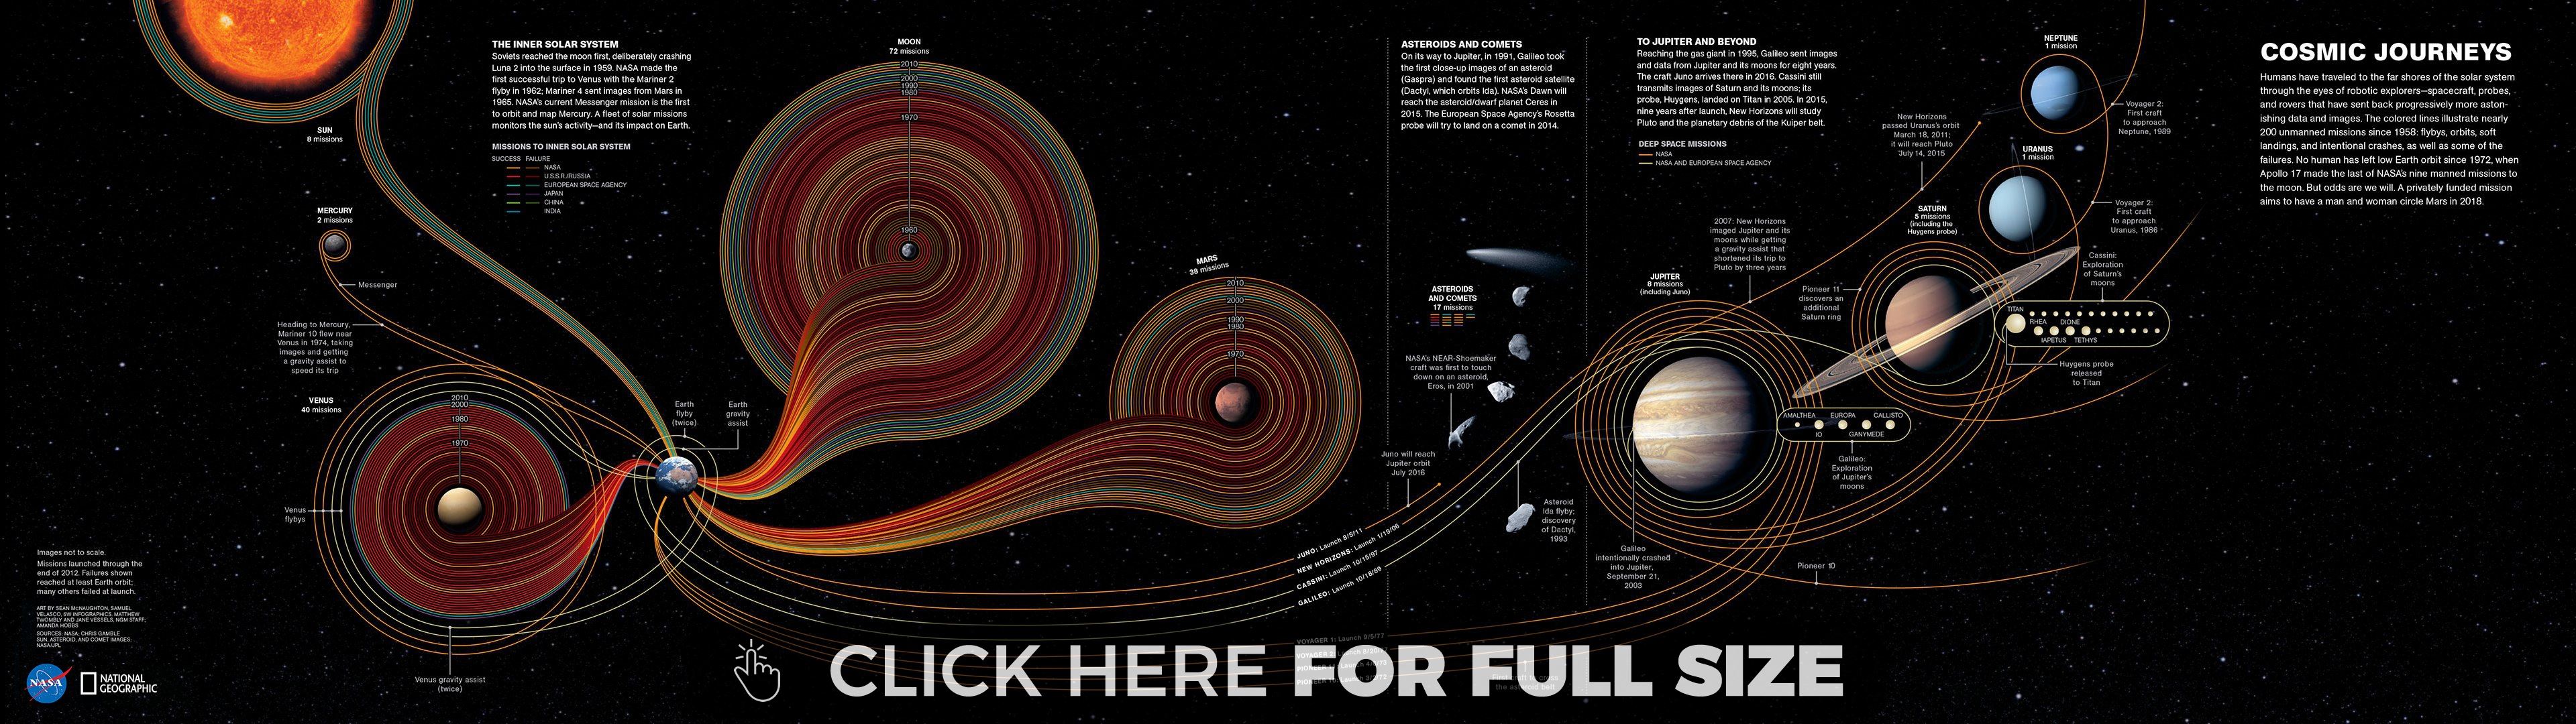 Cosmic Journeys Dual Screen 4k Wallpaper